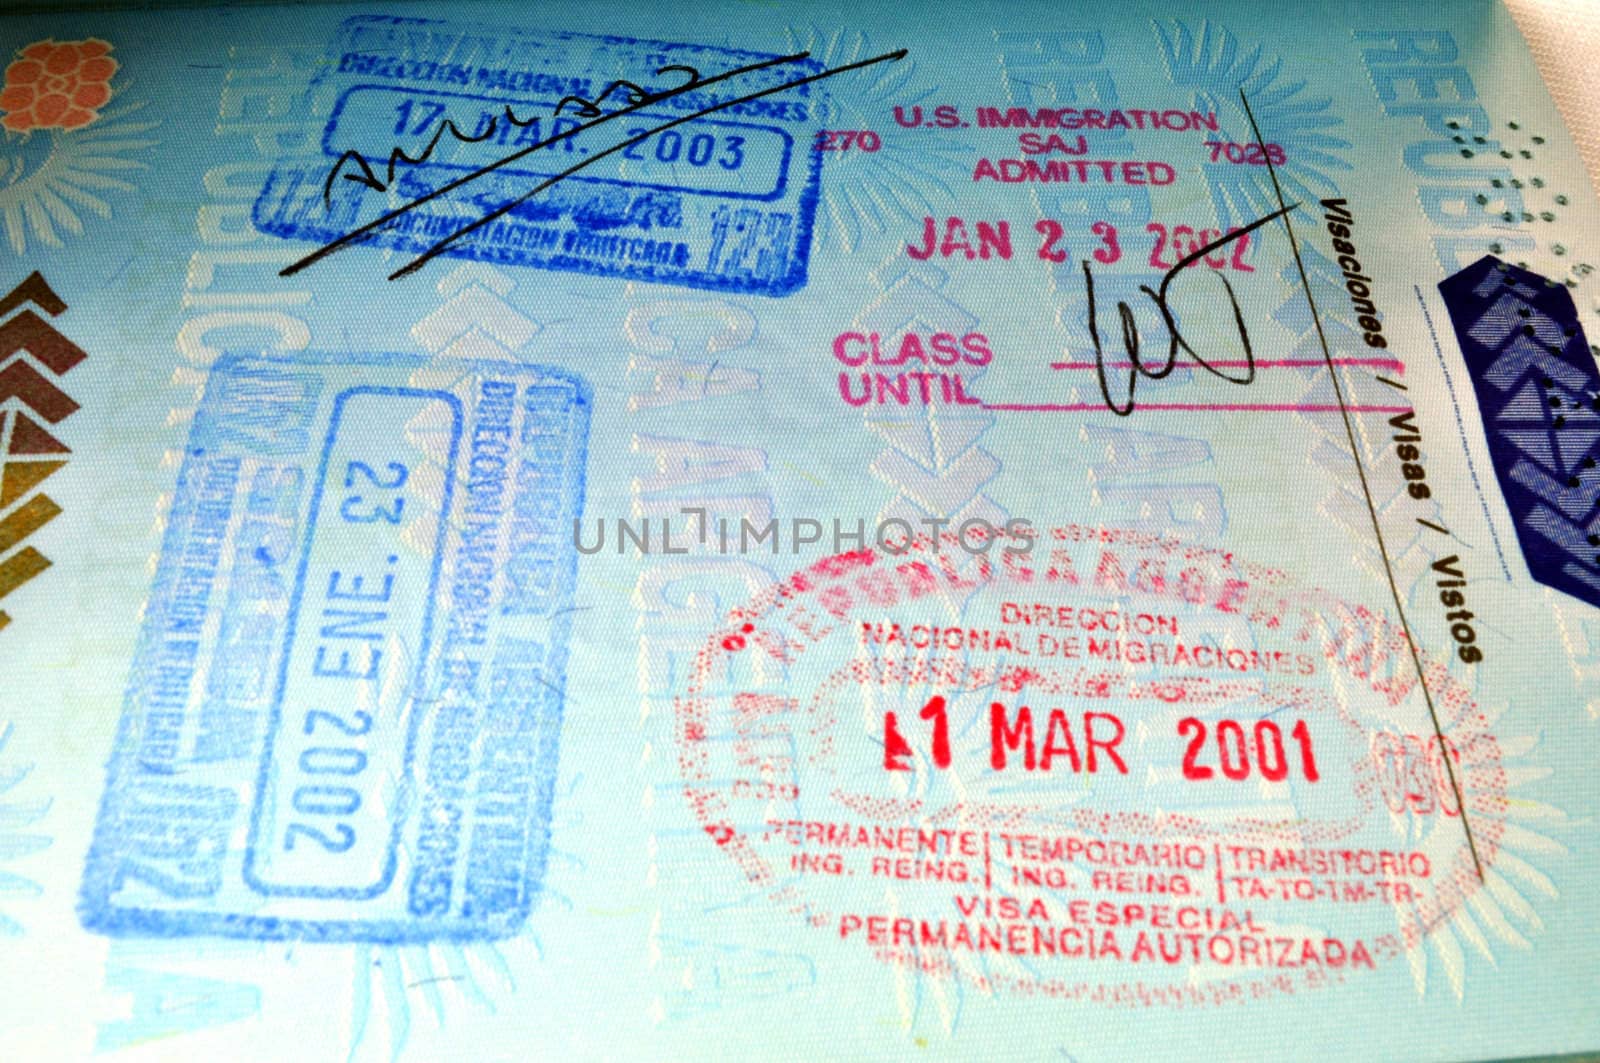 Migration stamps on passport.